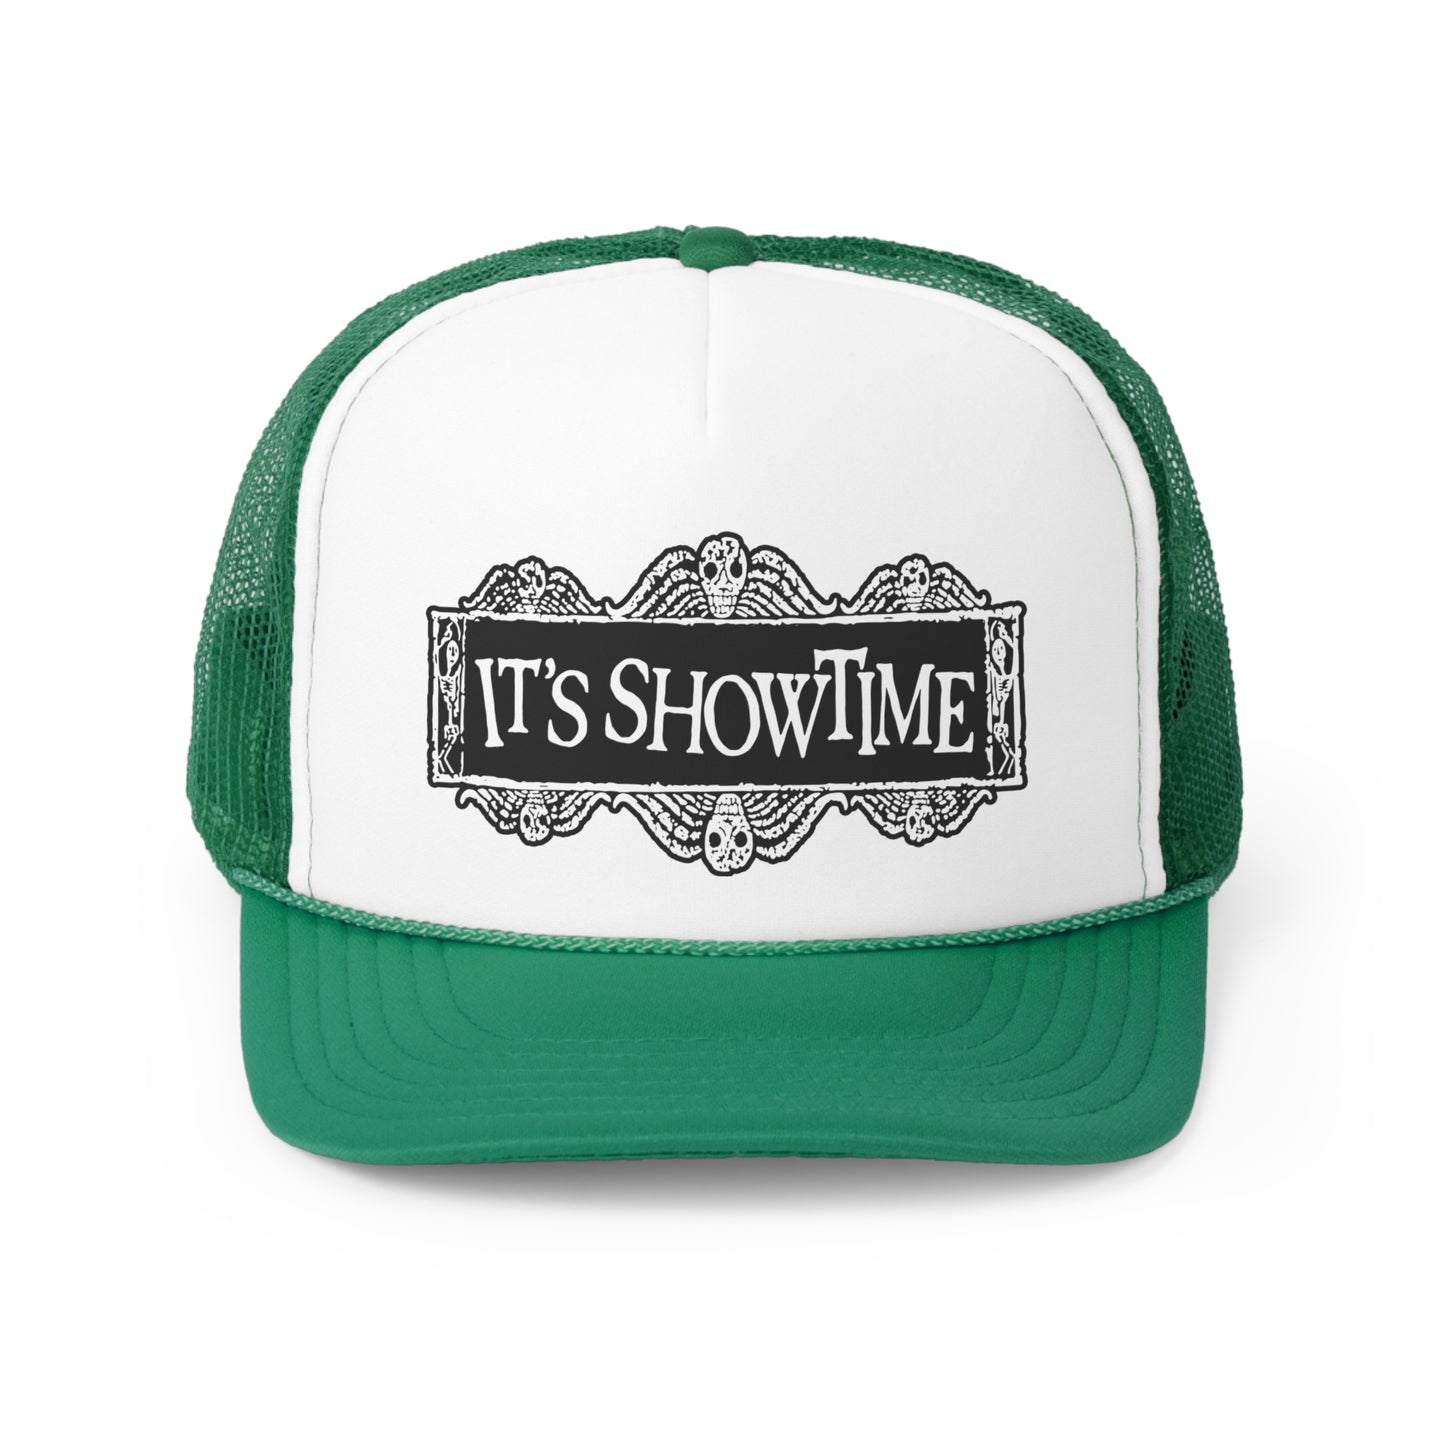 It's Showtime trucker hat